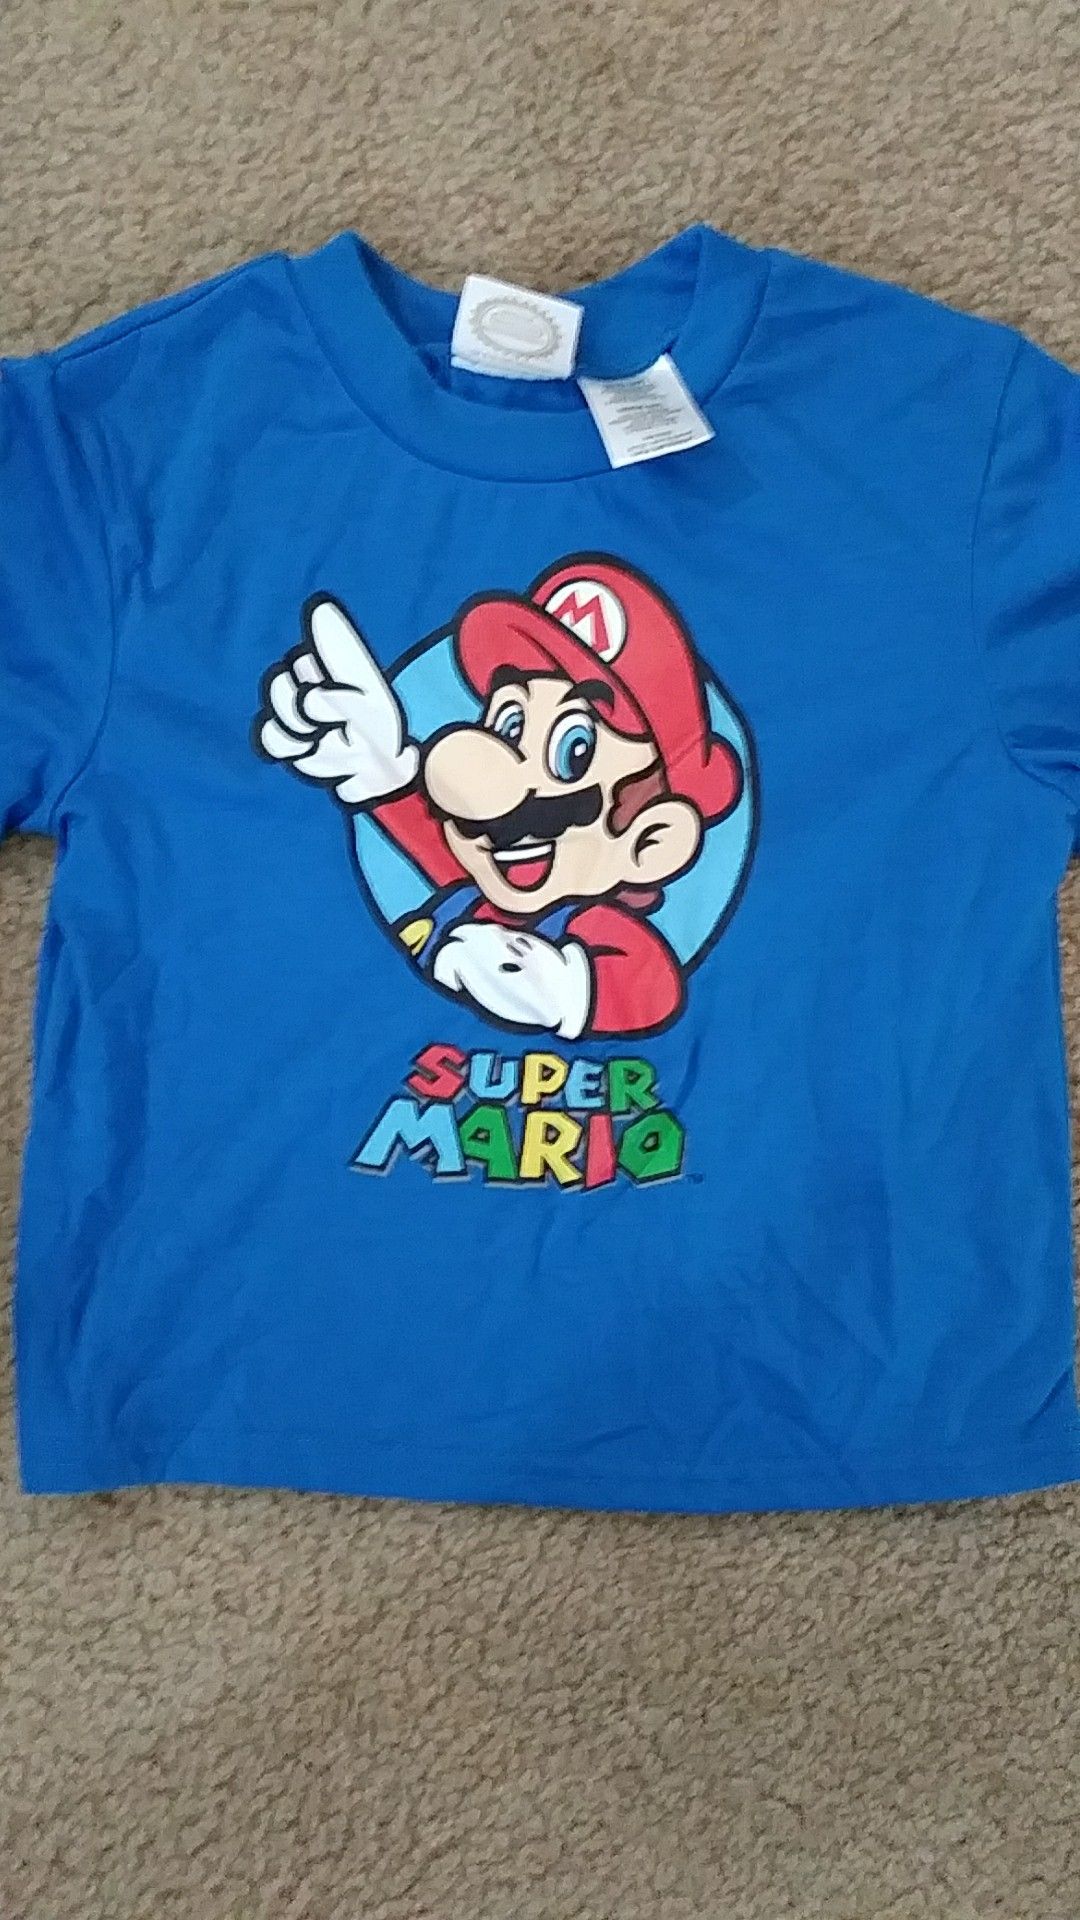 Size 6-7 boys ™Nintendo super Mario t-shirt NEW